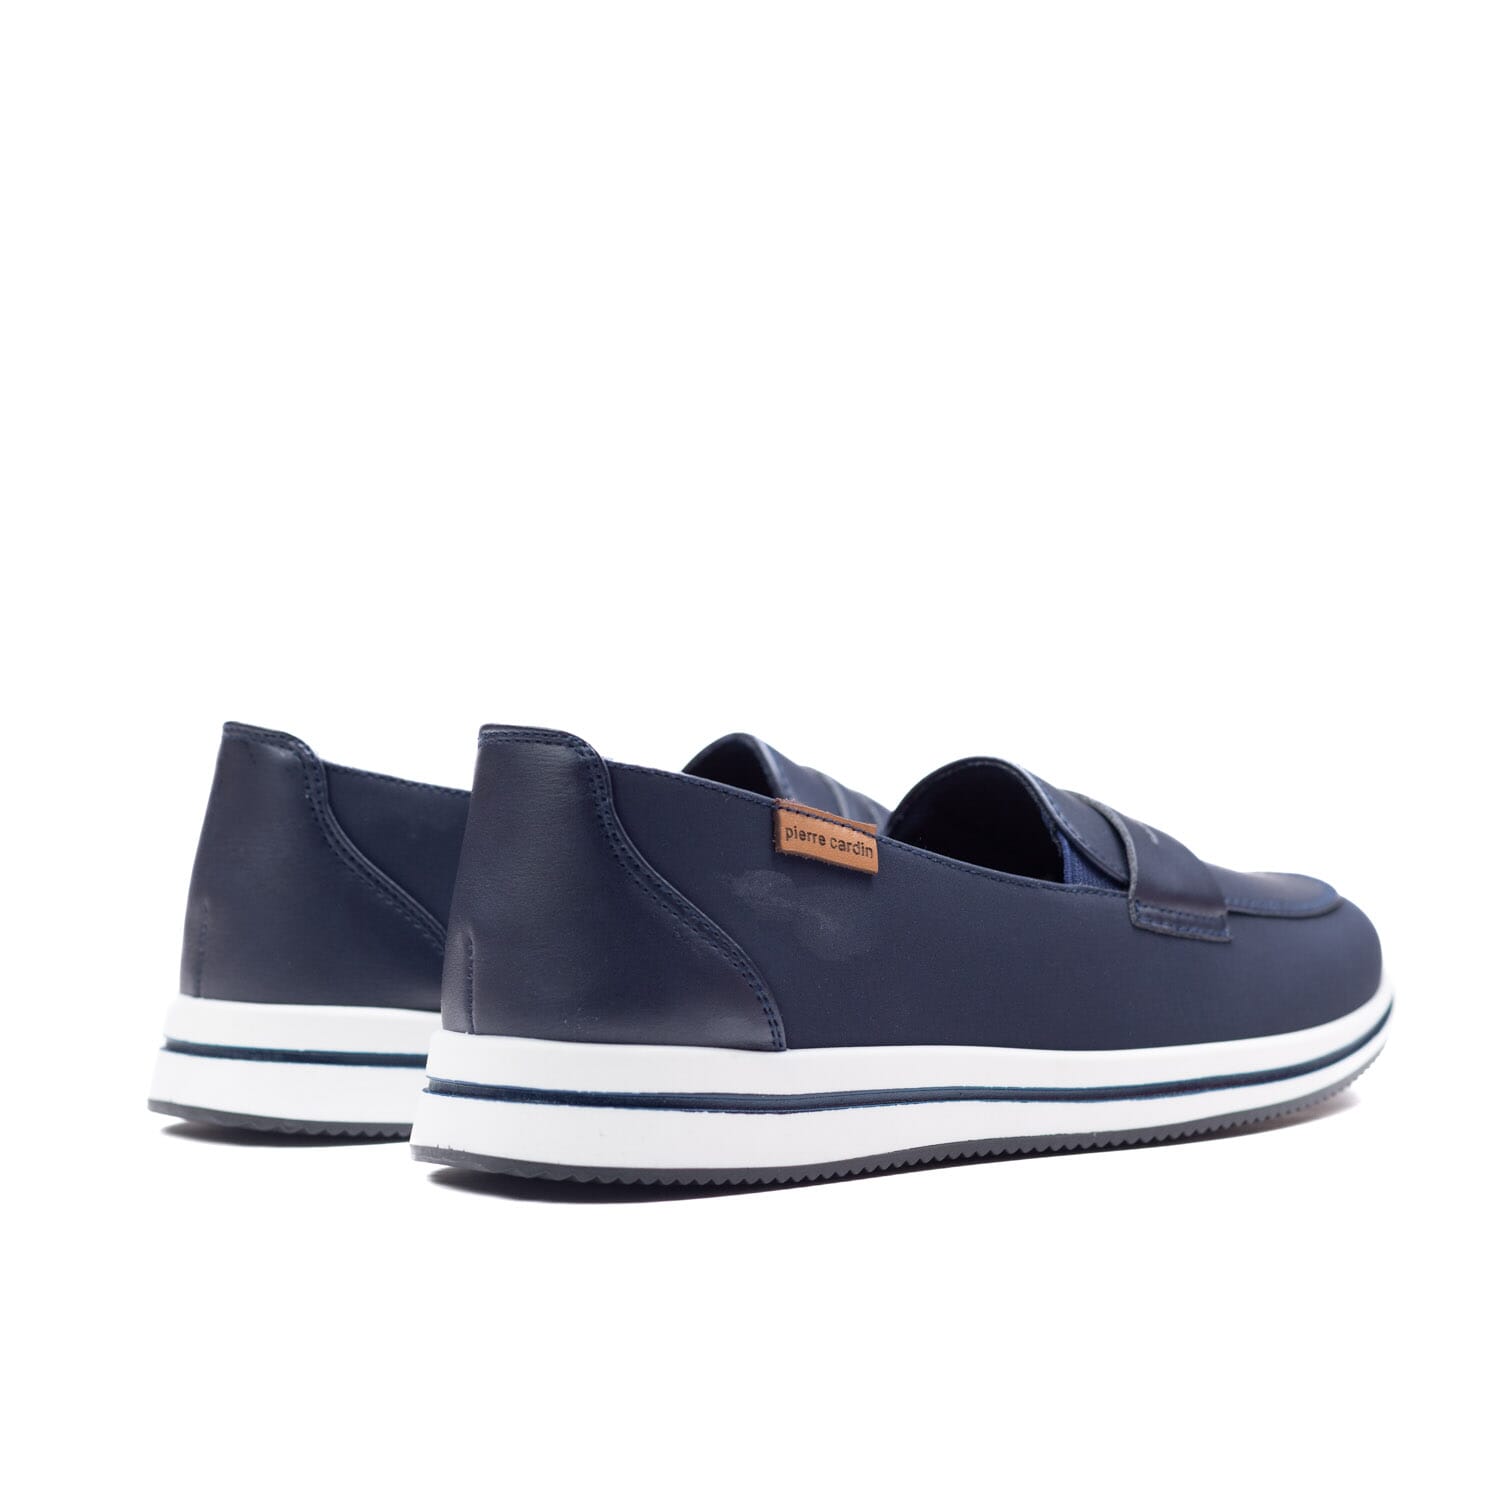 Pierre Cardin – 10387 – Navy – Perocili Shoes